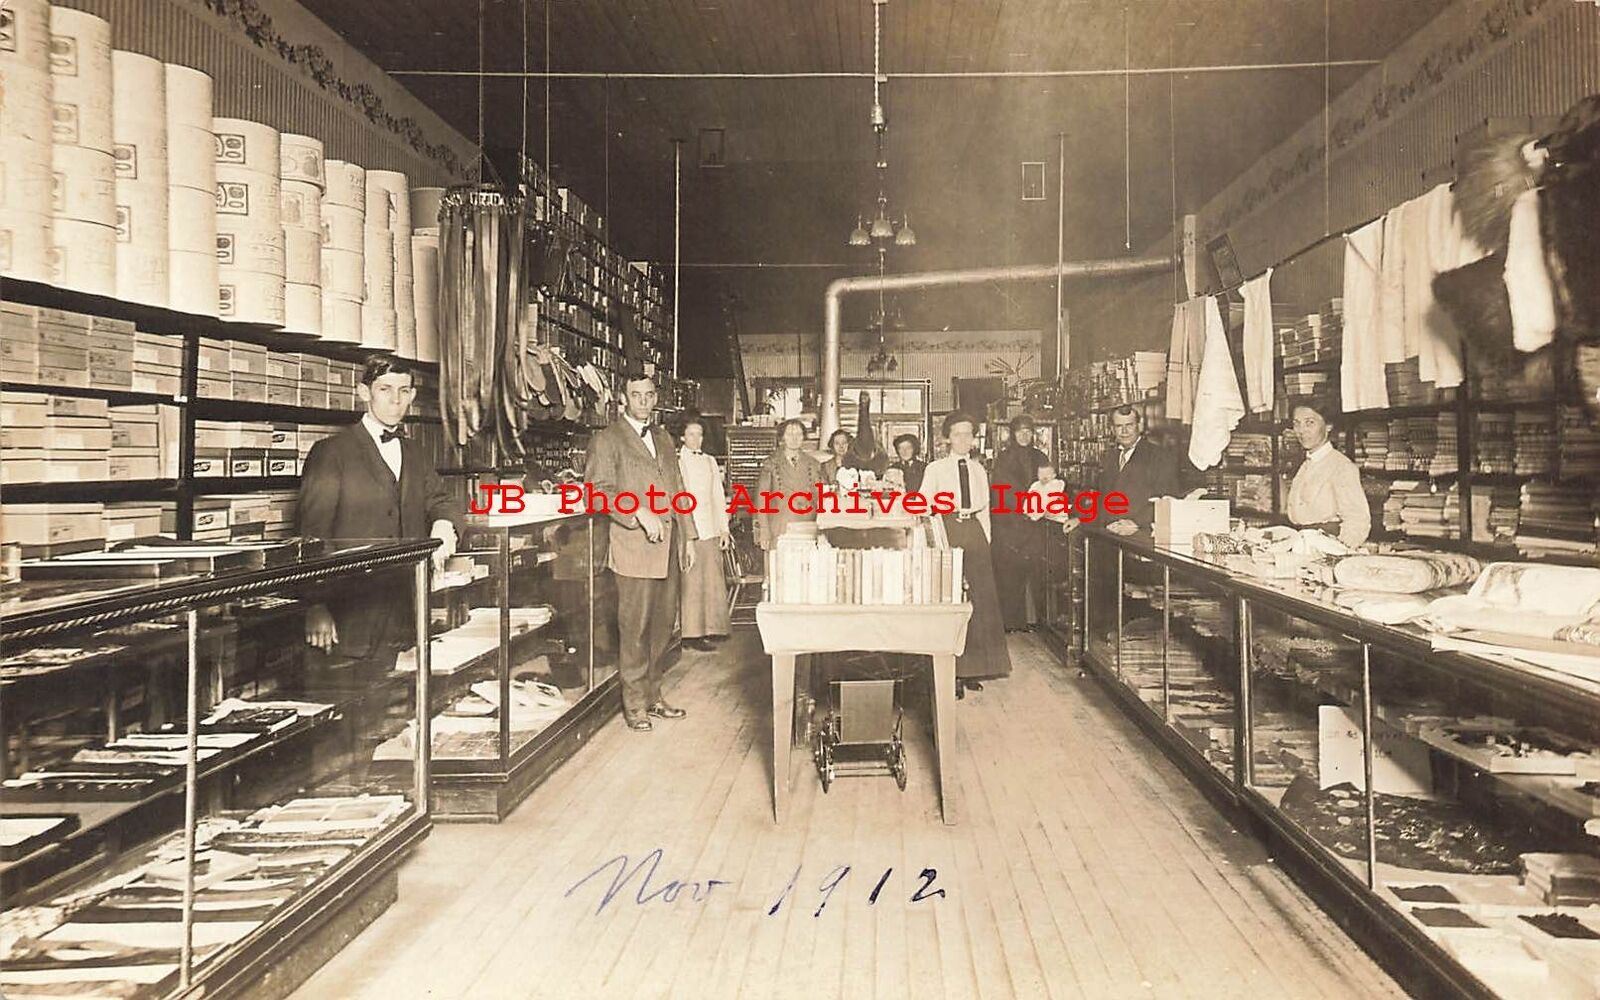 MO, Queen City, Missouri, RPPC, Mercantile Company Interior, 1912, Photo